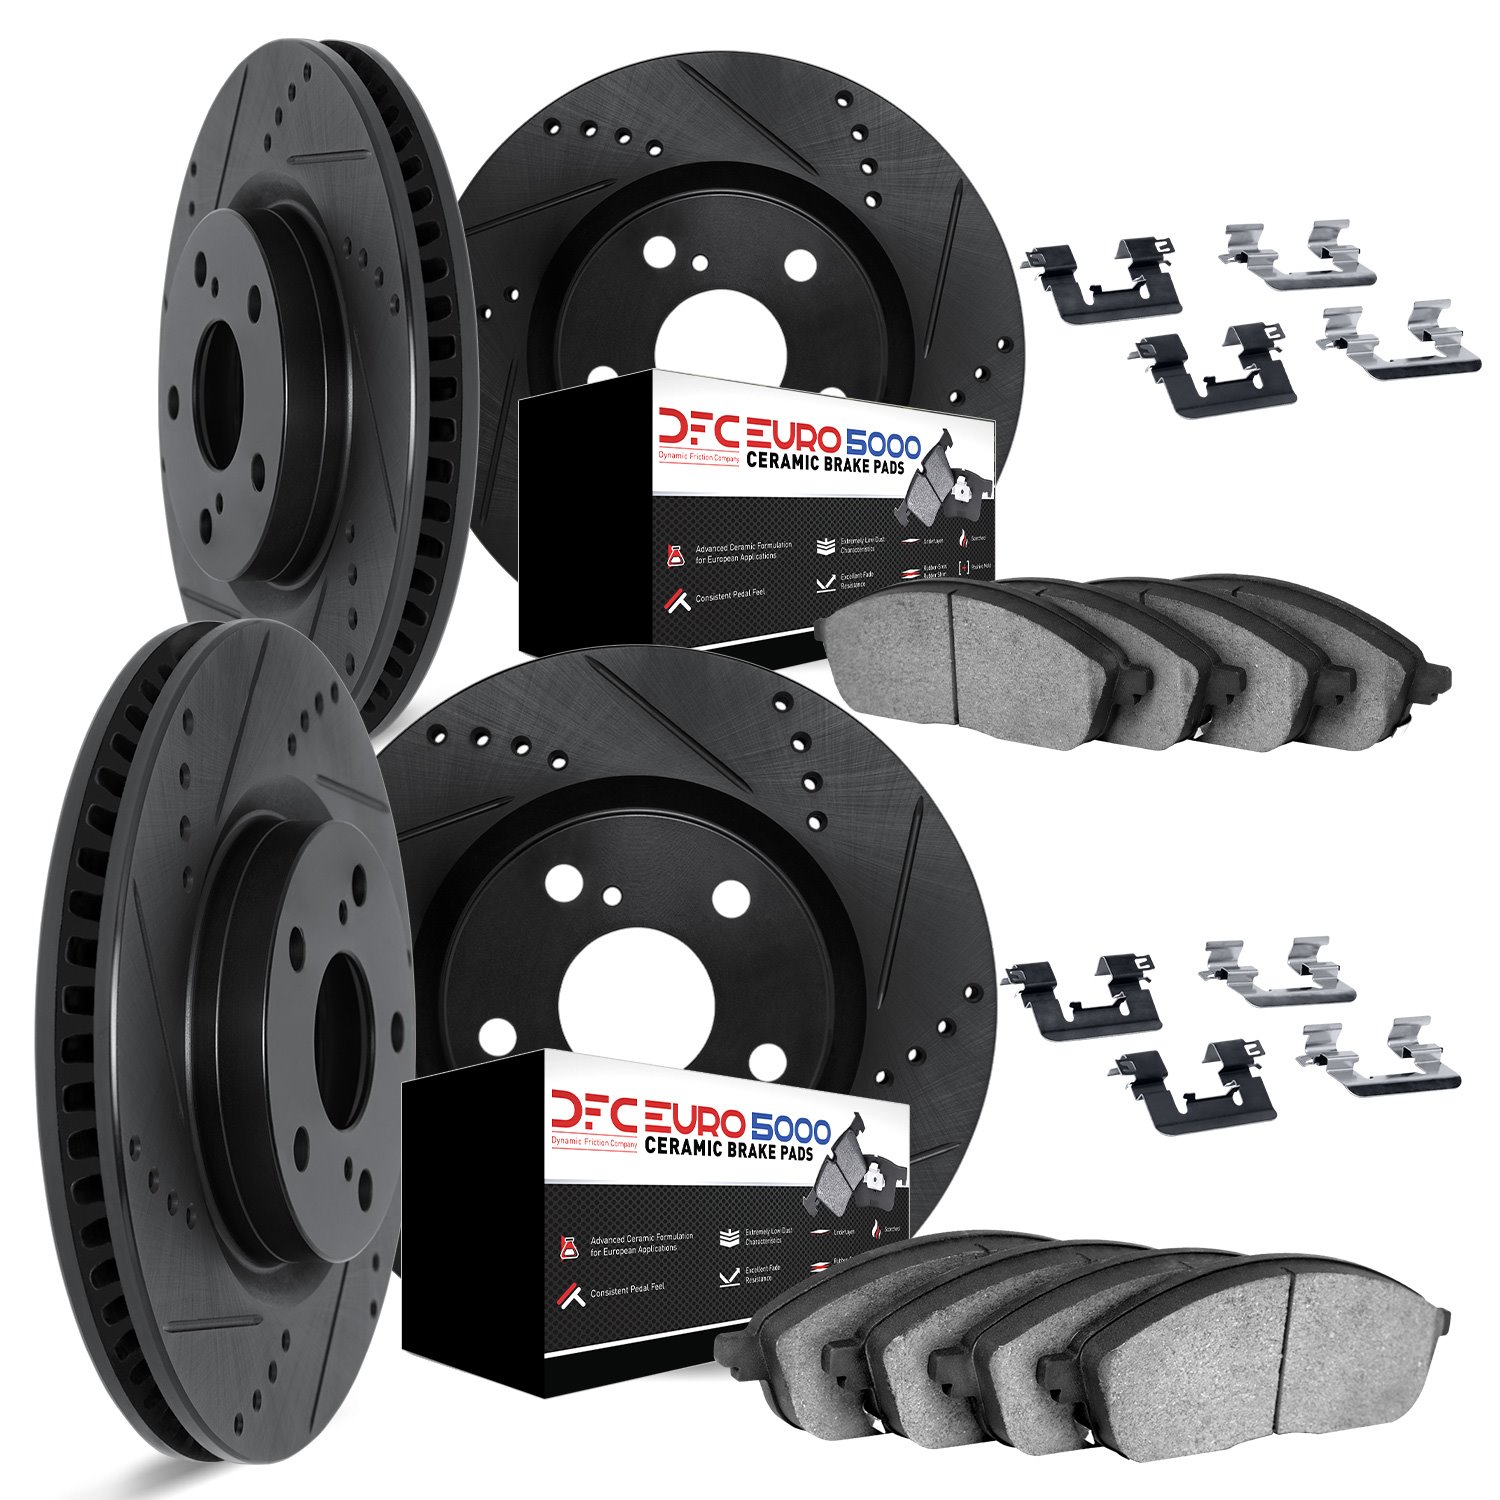 8614-26000 Drilled/Slotted Brake Rotors w/5000 Euro Ceramic Brake Pads Kit & Hardware [Black], 2012-2013 Tesla, Position: Front